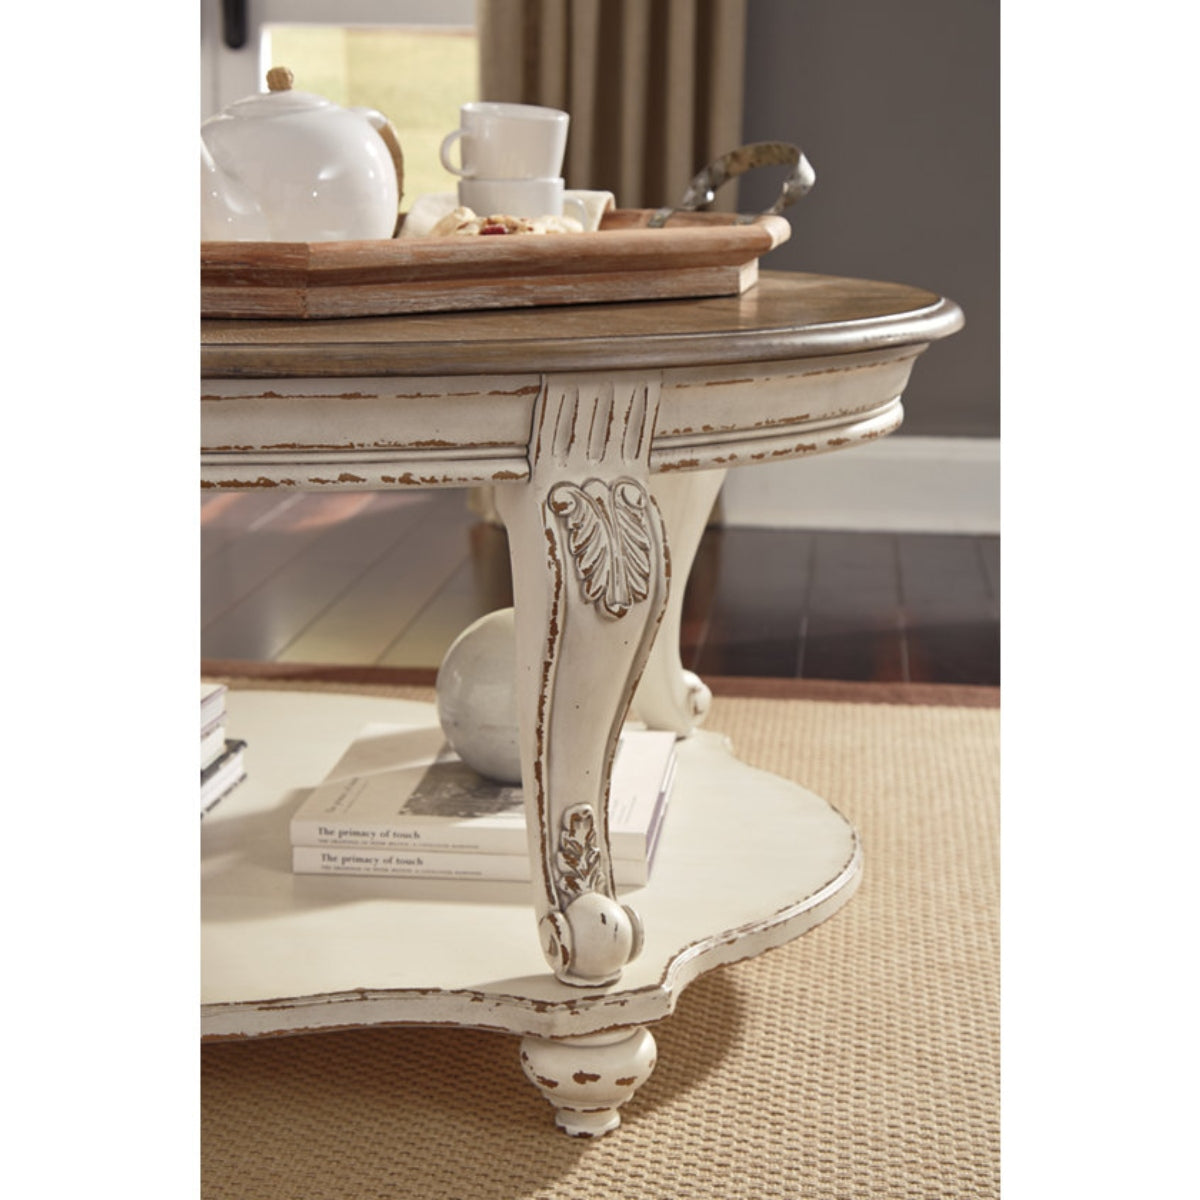 House of Classic Τραπέζι Σαλονιού με Ράφι Ξύλινο Αντικέ Λευκό/Καφέ T743-0